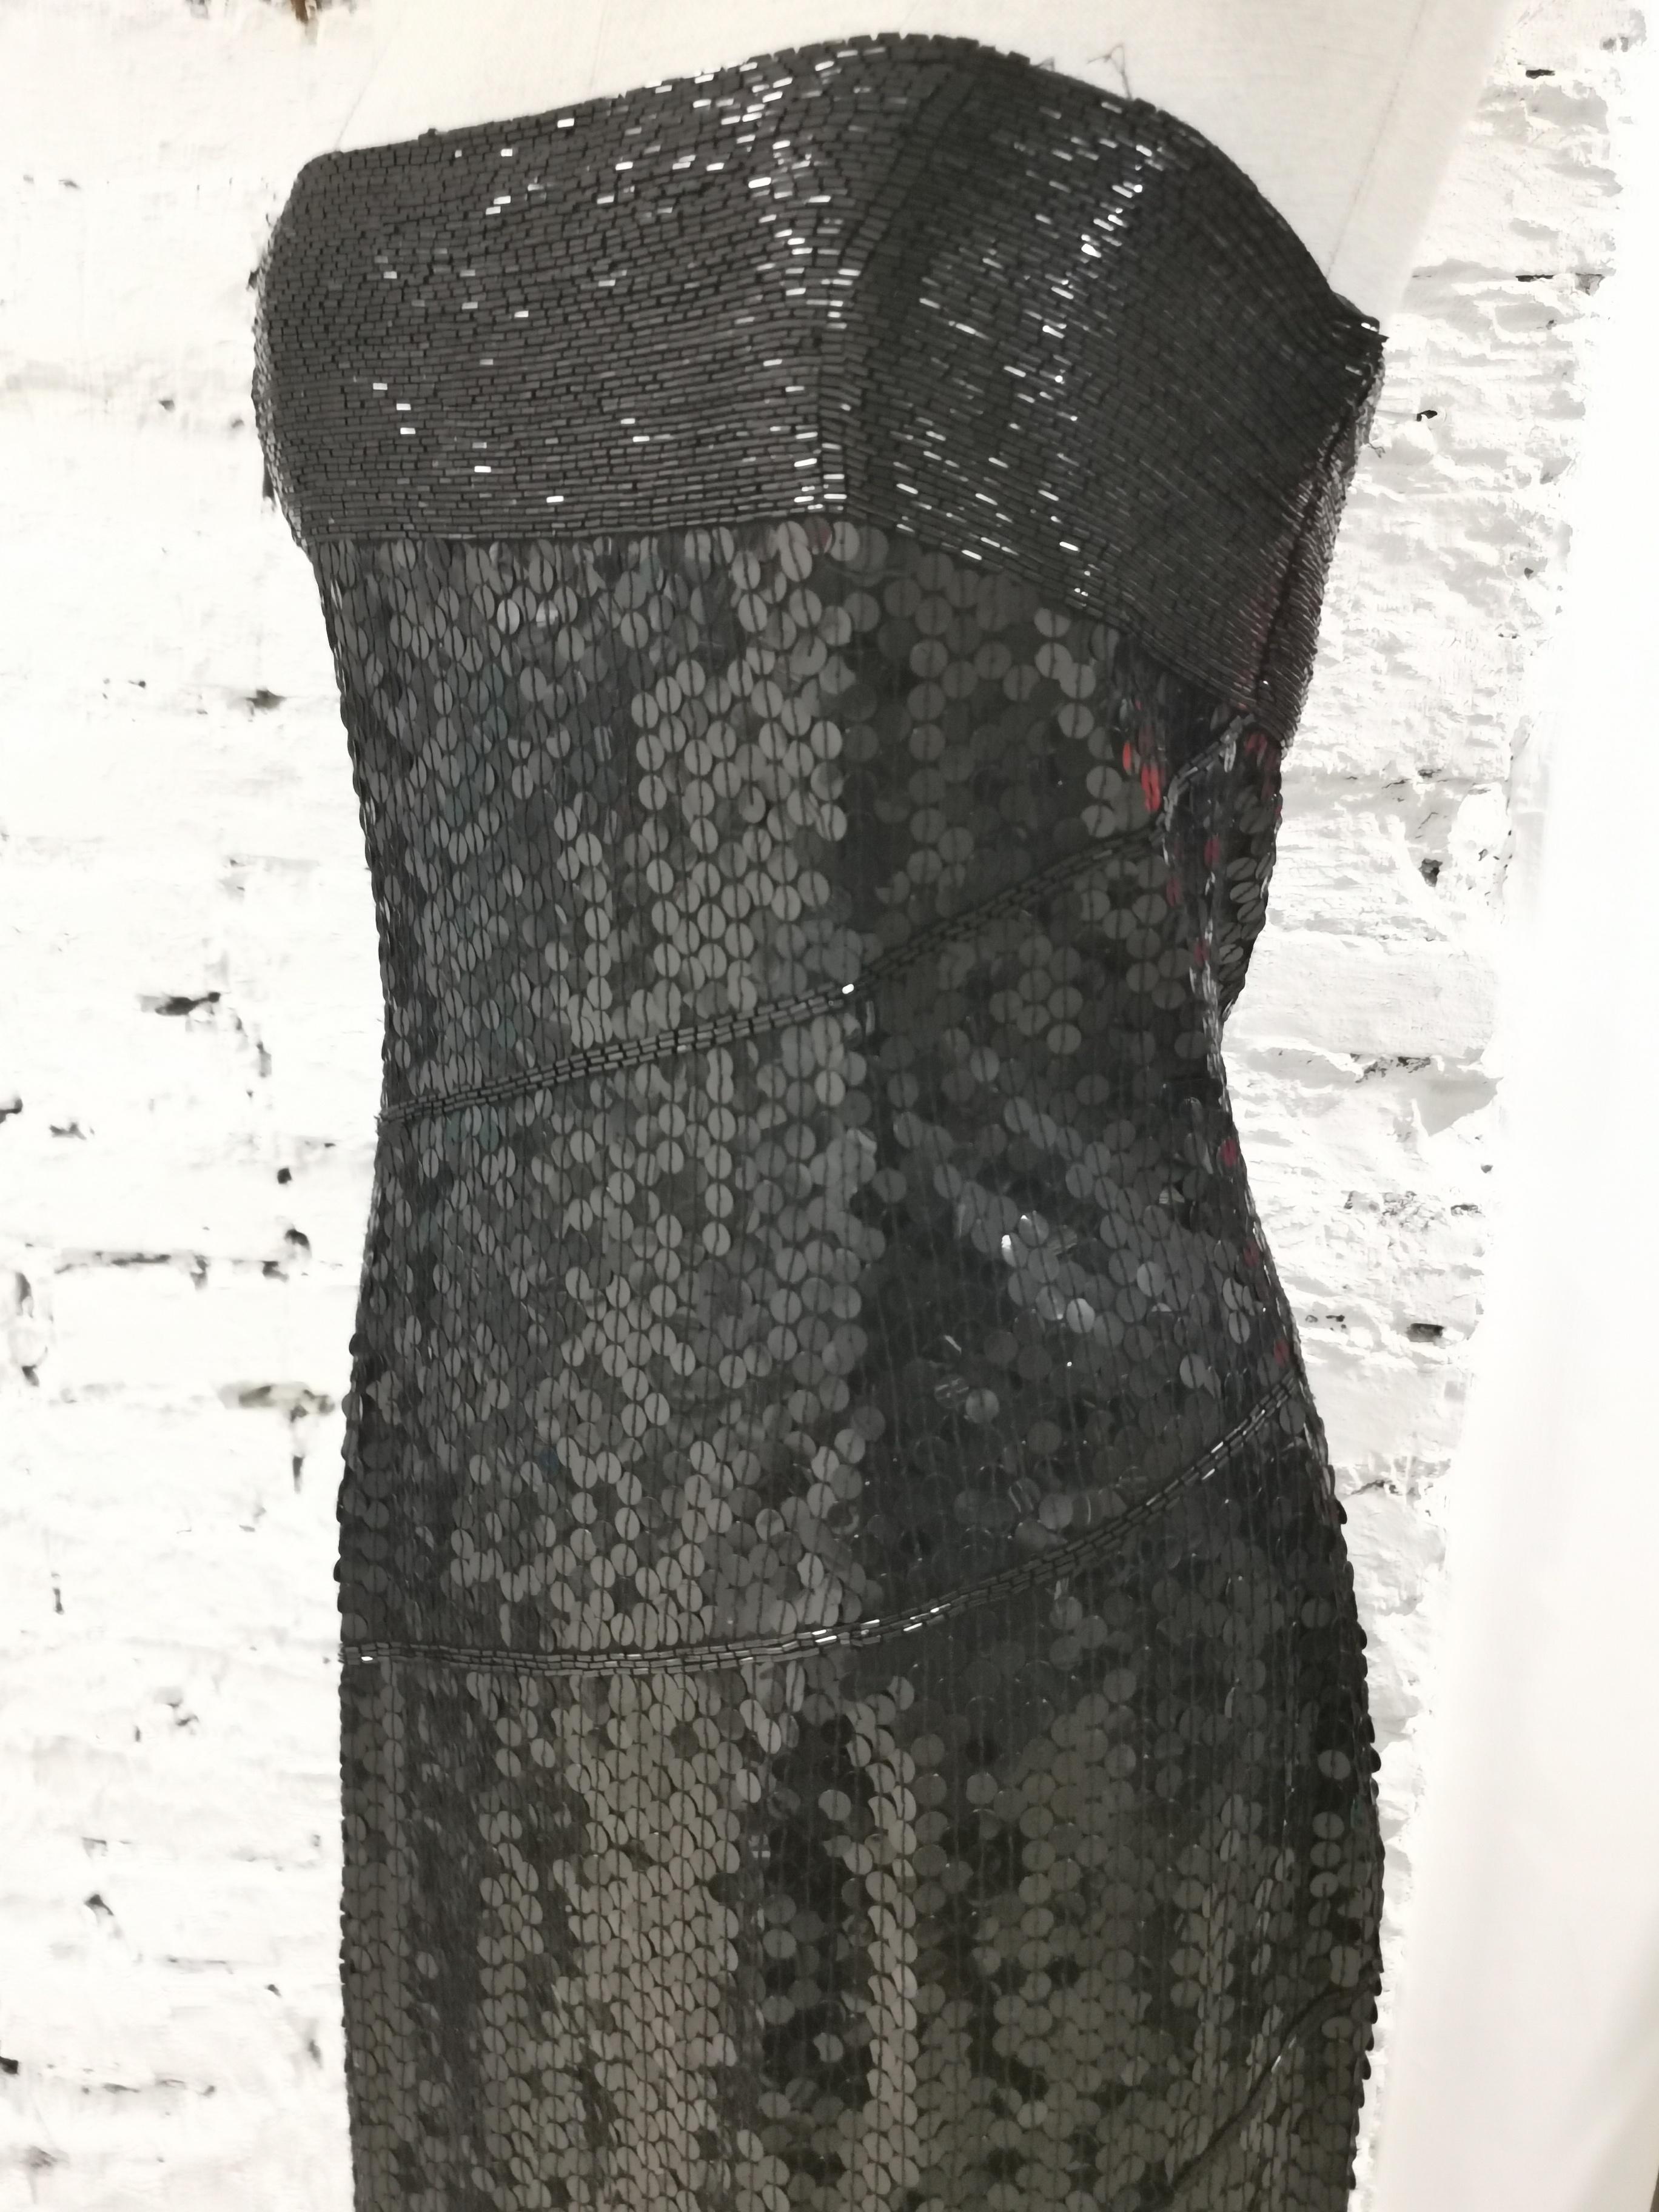 Vintage black long beads dress
Size UK 14
NWOT